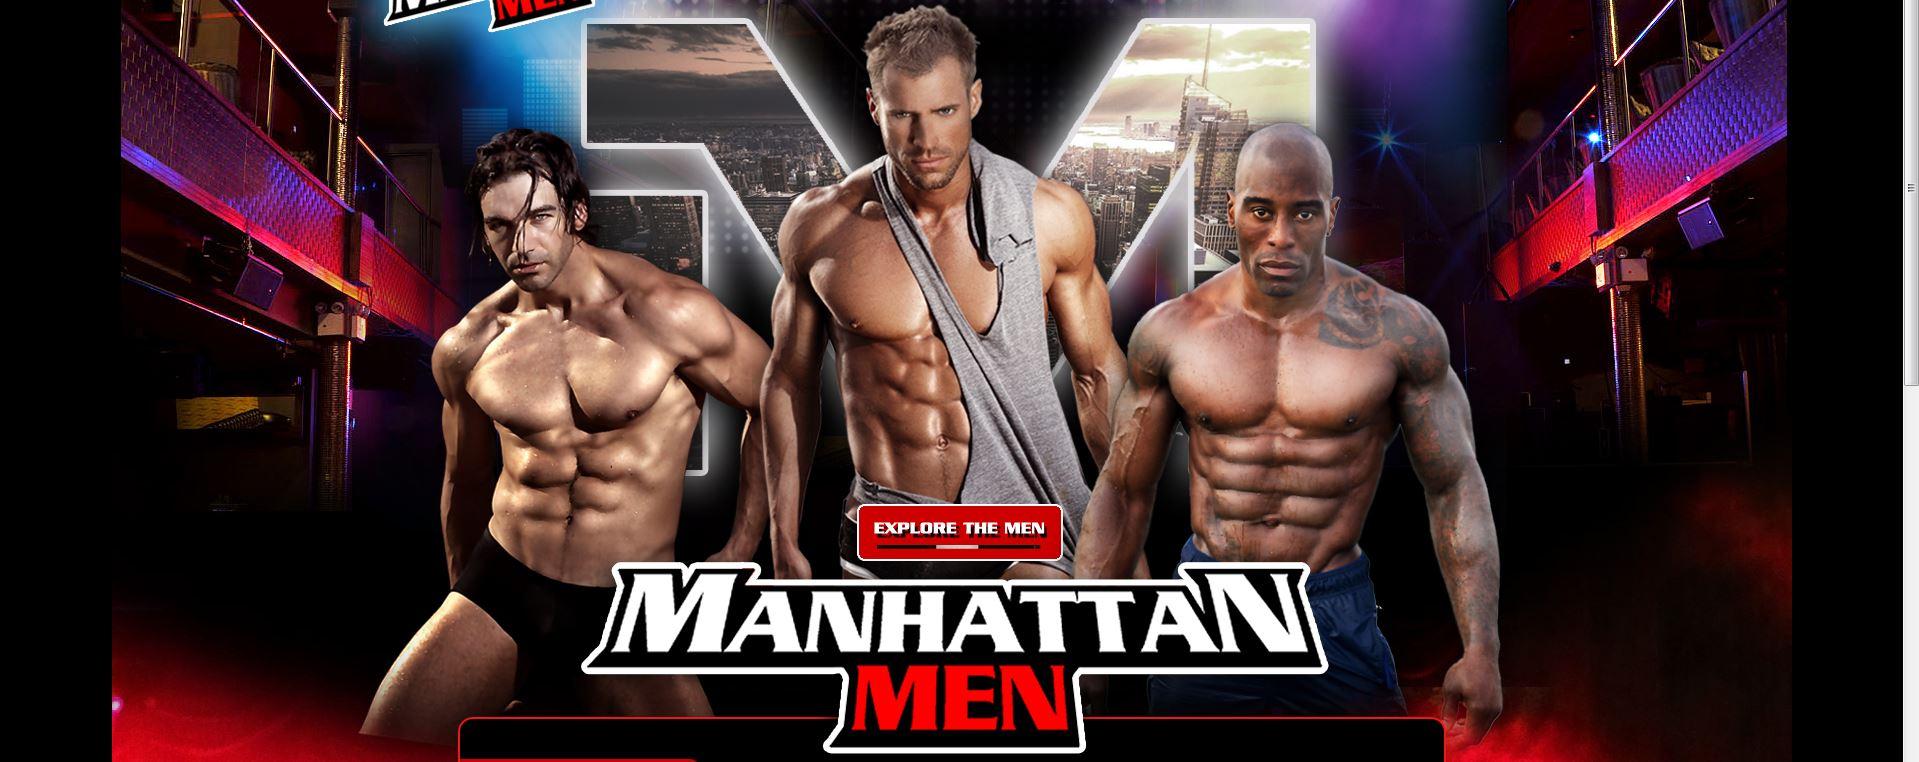 Manhattan Men Male Strip Club | Male Strippers | Male Revues NYC